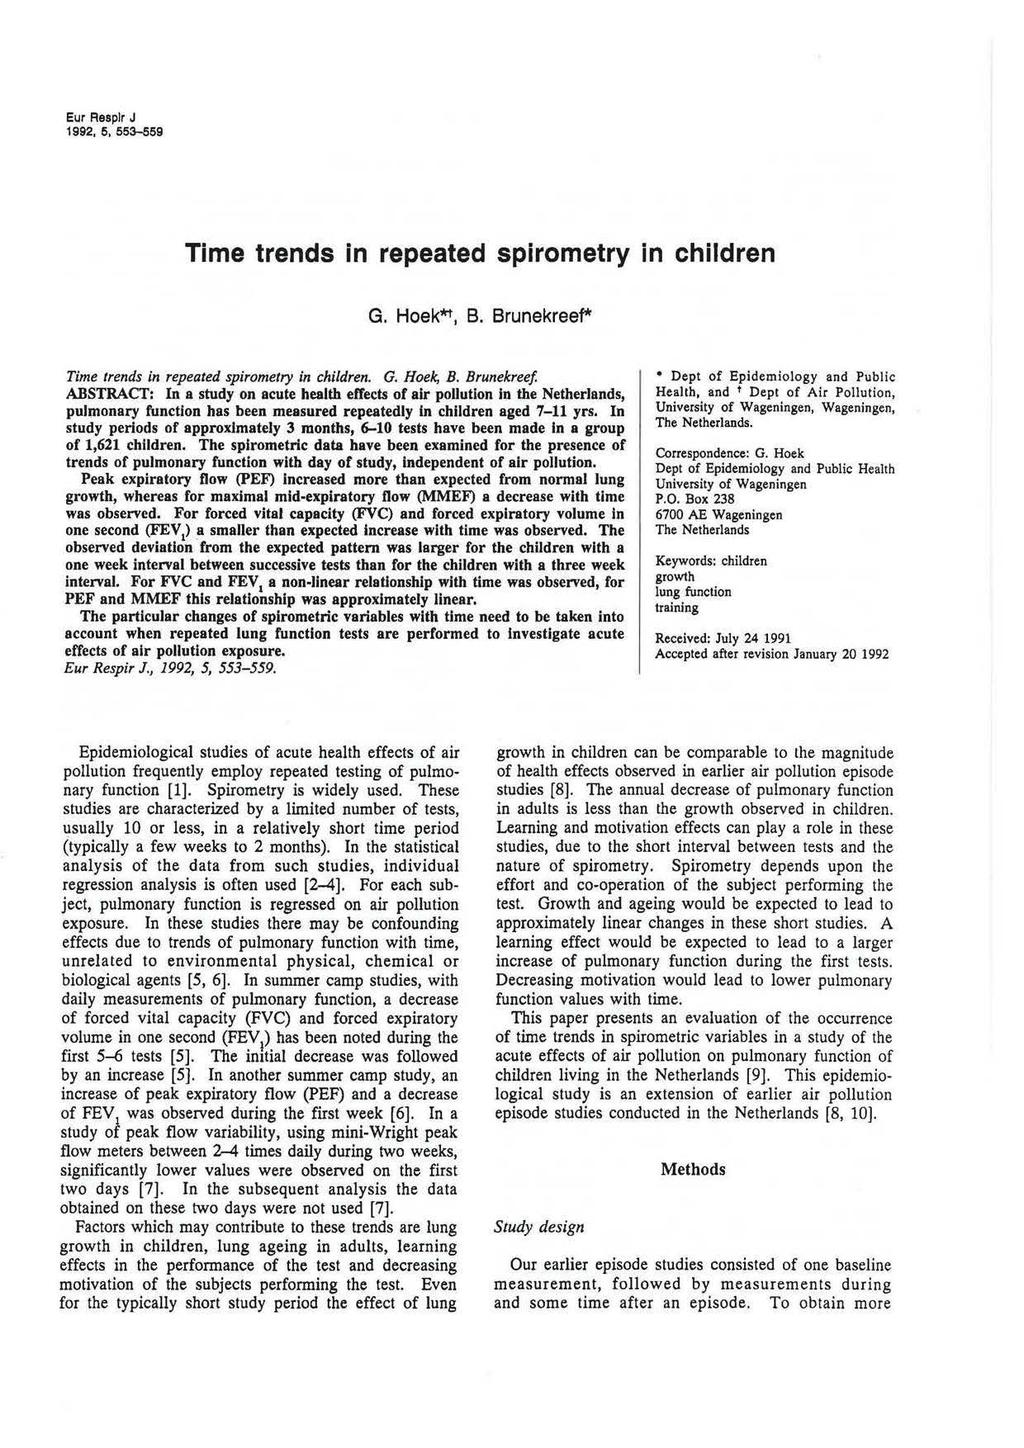 Eur Resplr J 199, 6, 55:H559 Time trends in repeted spirometry in children G. Hoek*t, B. Brunekreef*